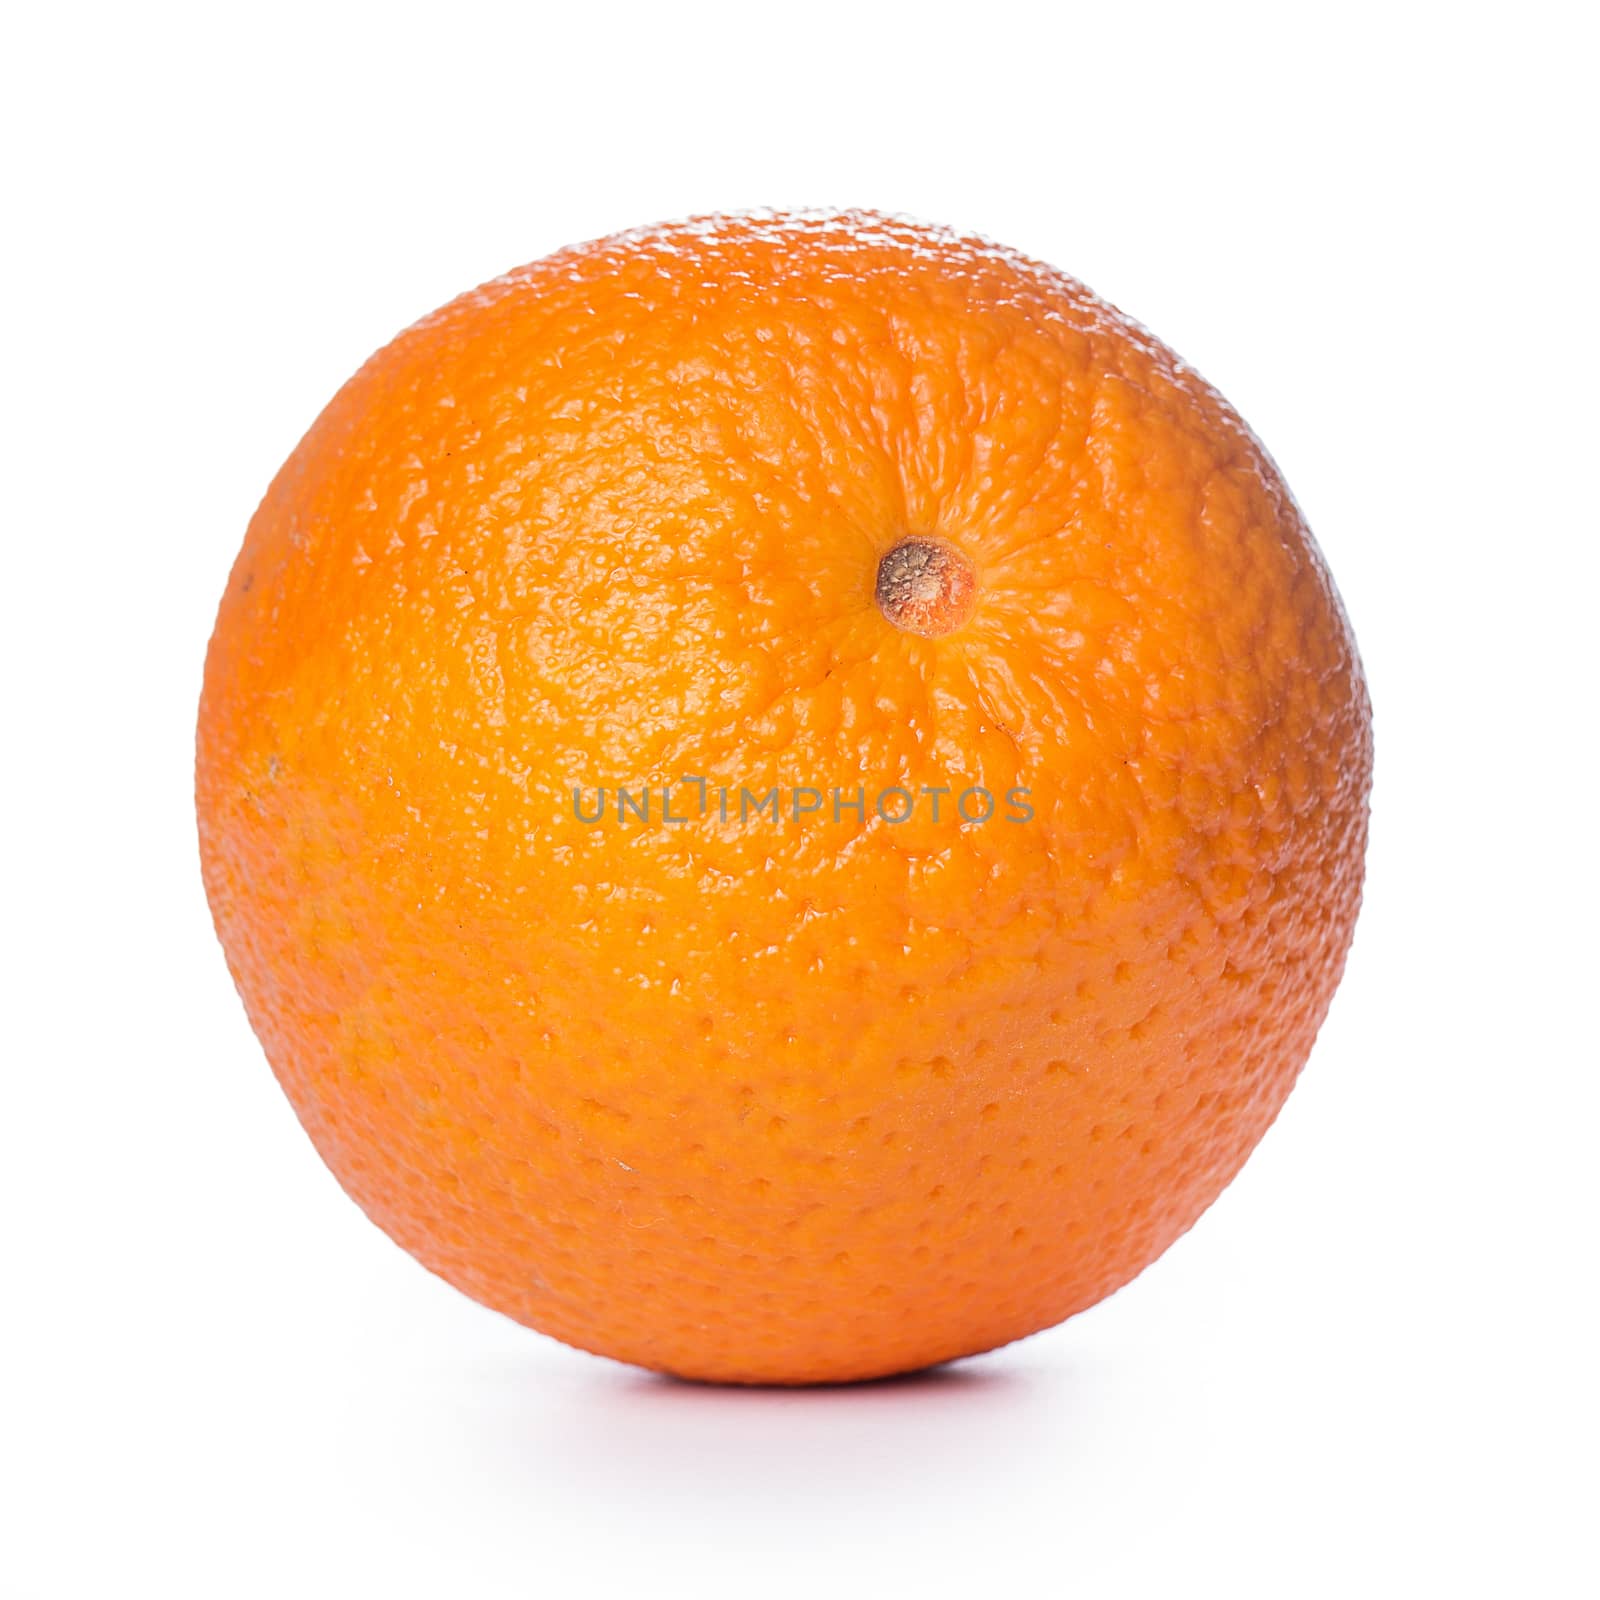 Closeup picture of an orange